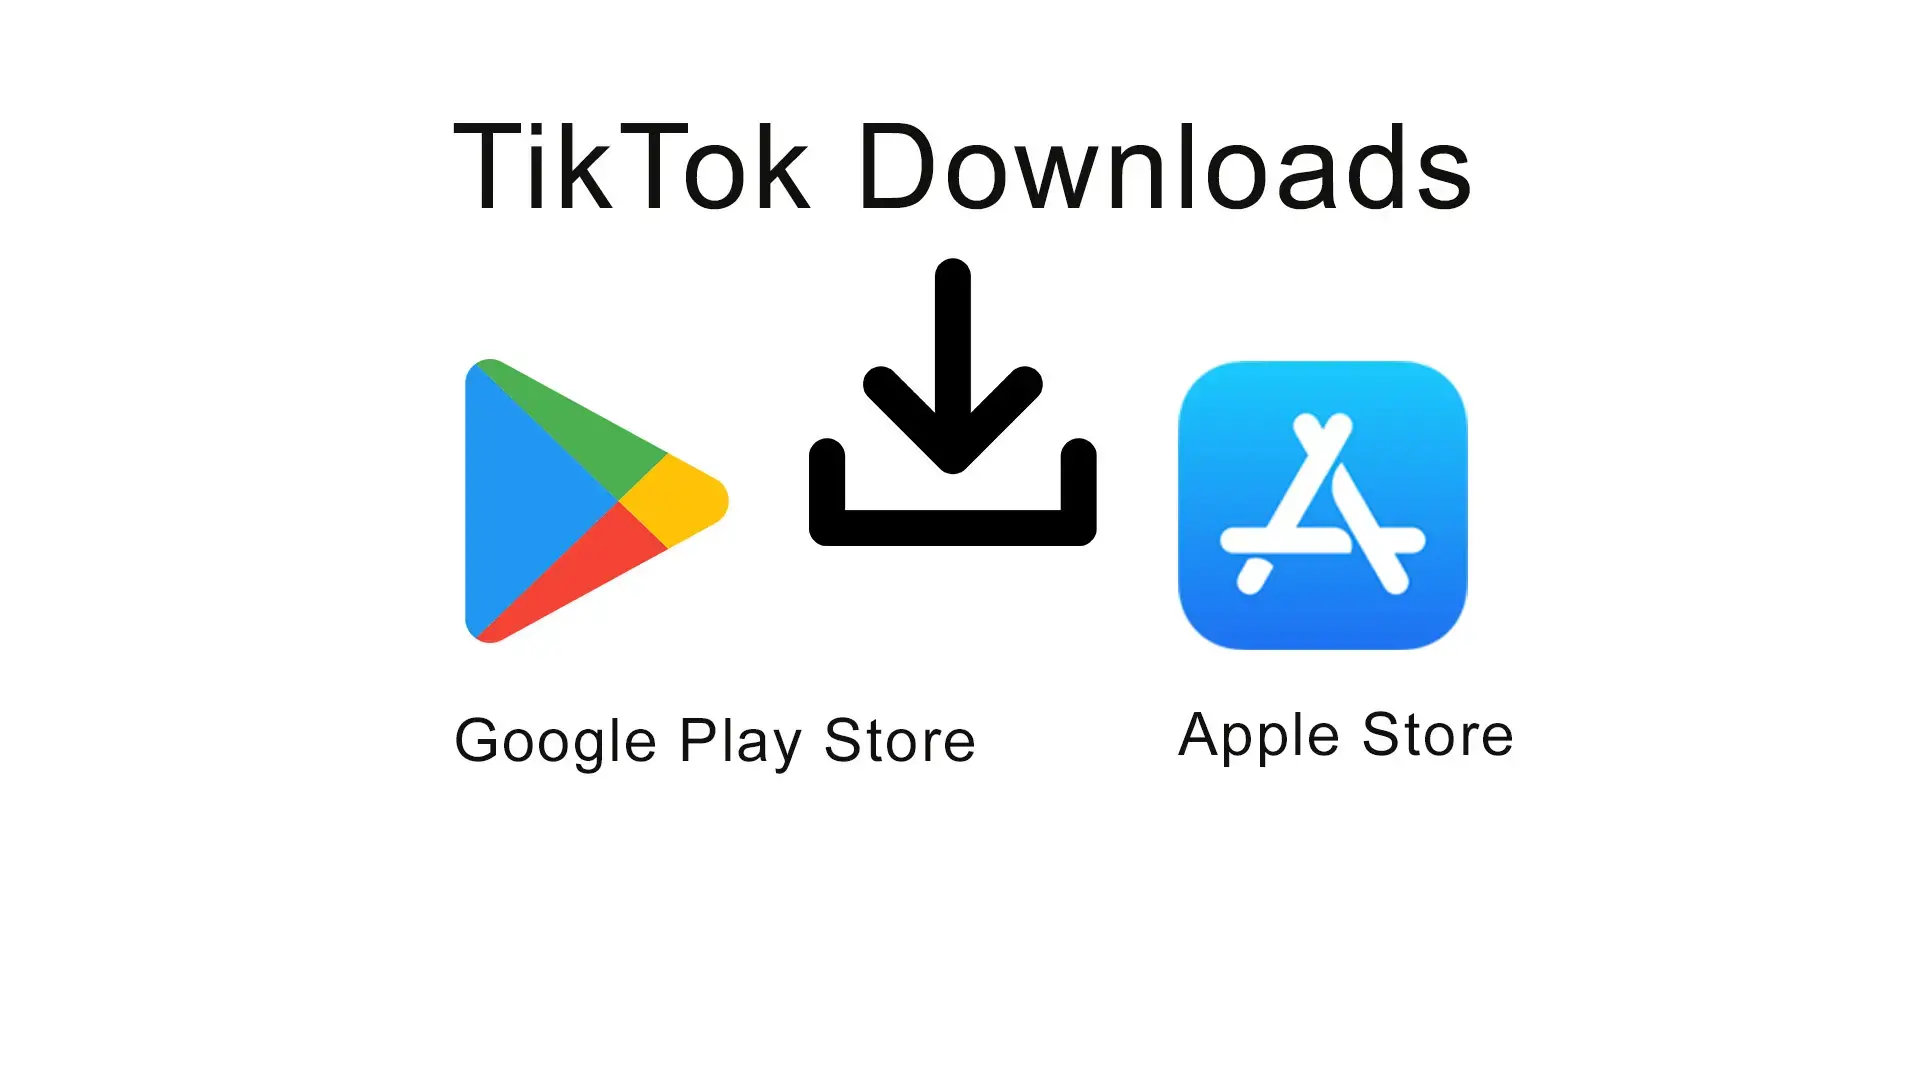 TikTok Downloads